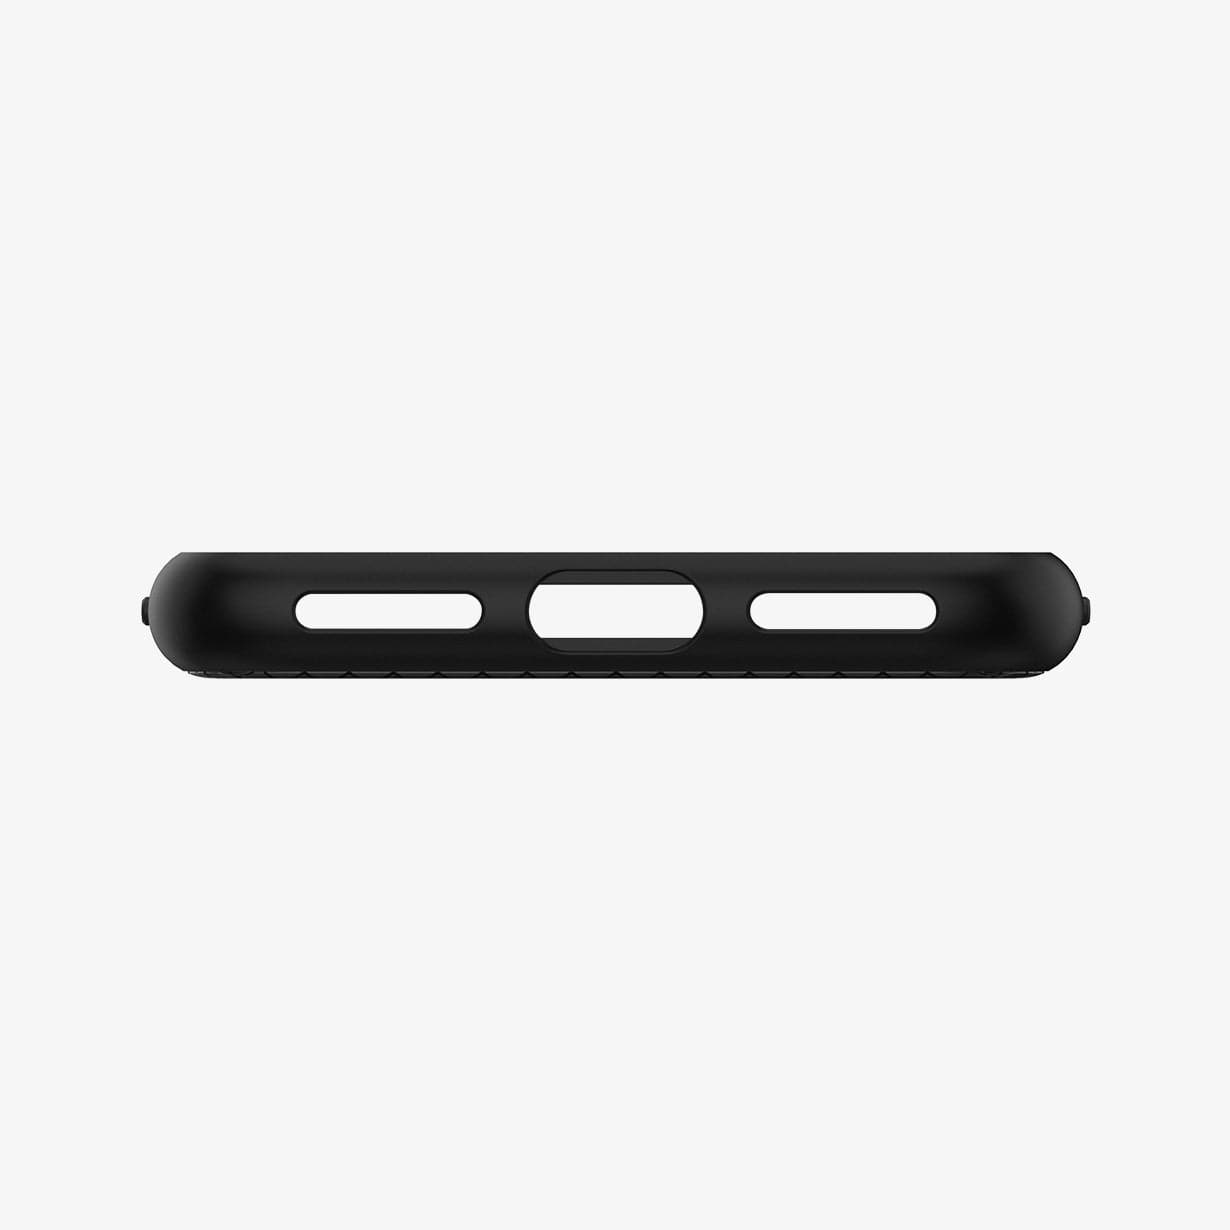 042CS20511 - iPhone 7 Case Liquid Air in black showing the bottom